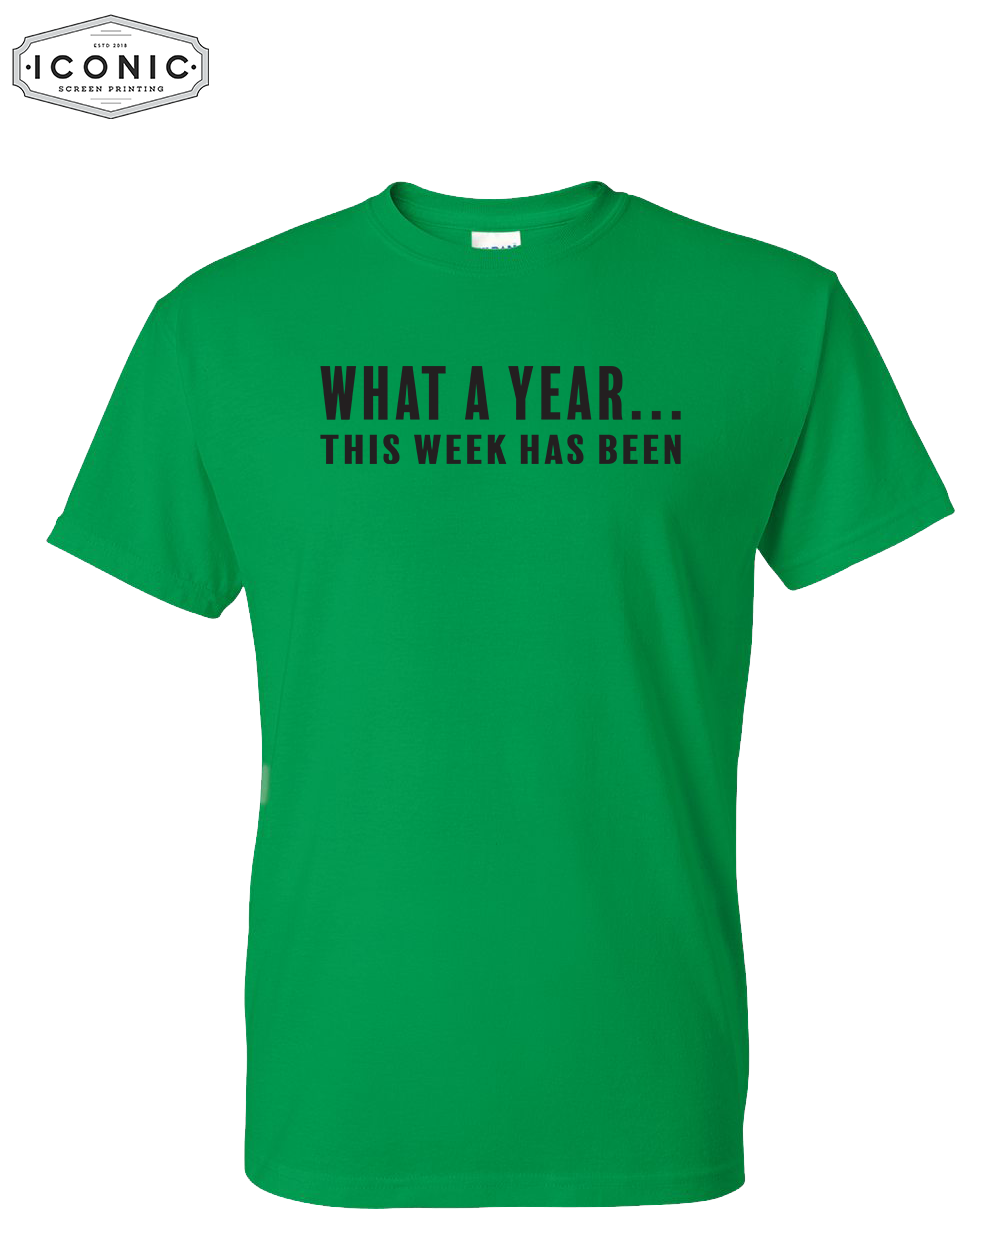 What A Year - DryBlend T-shirt